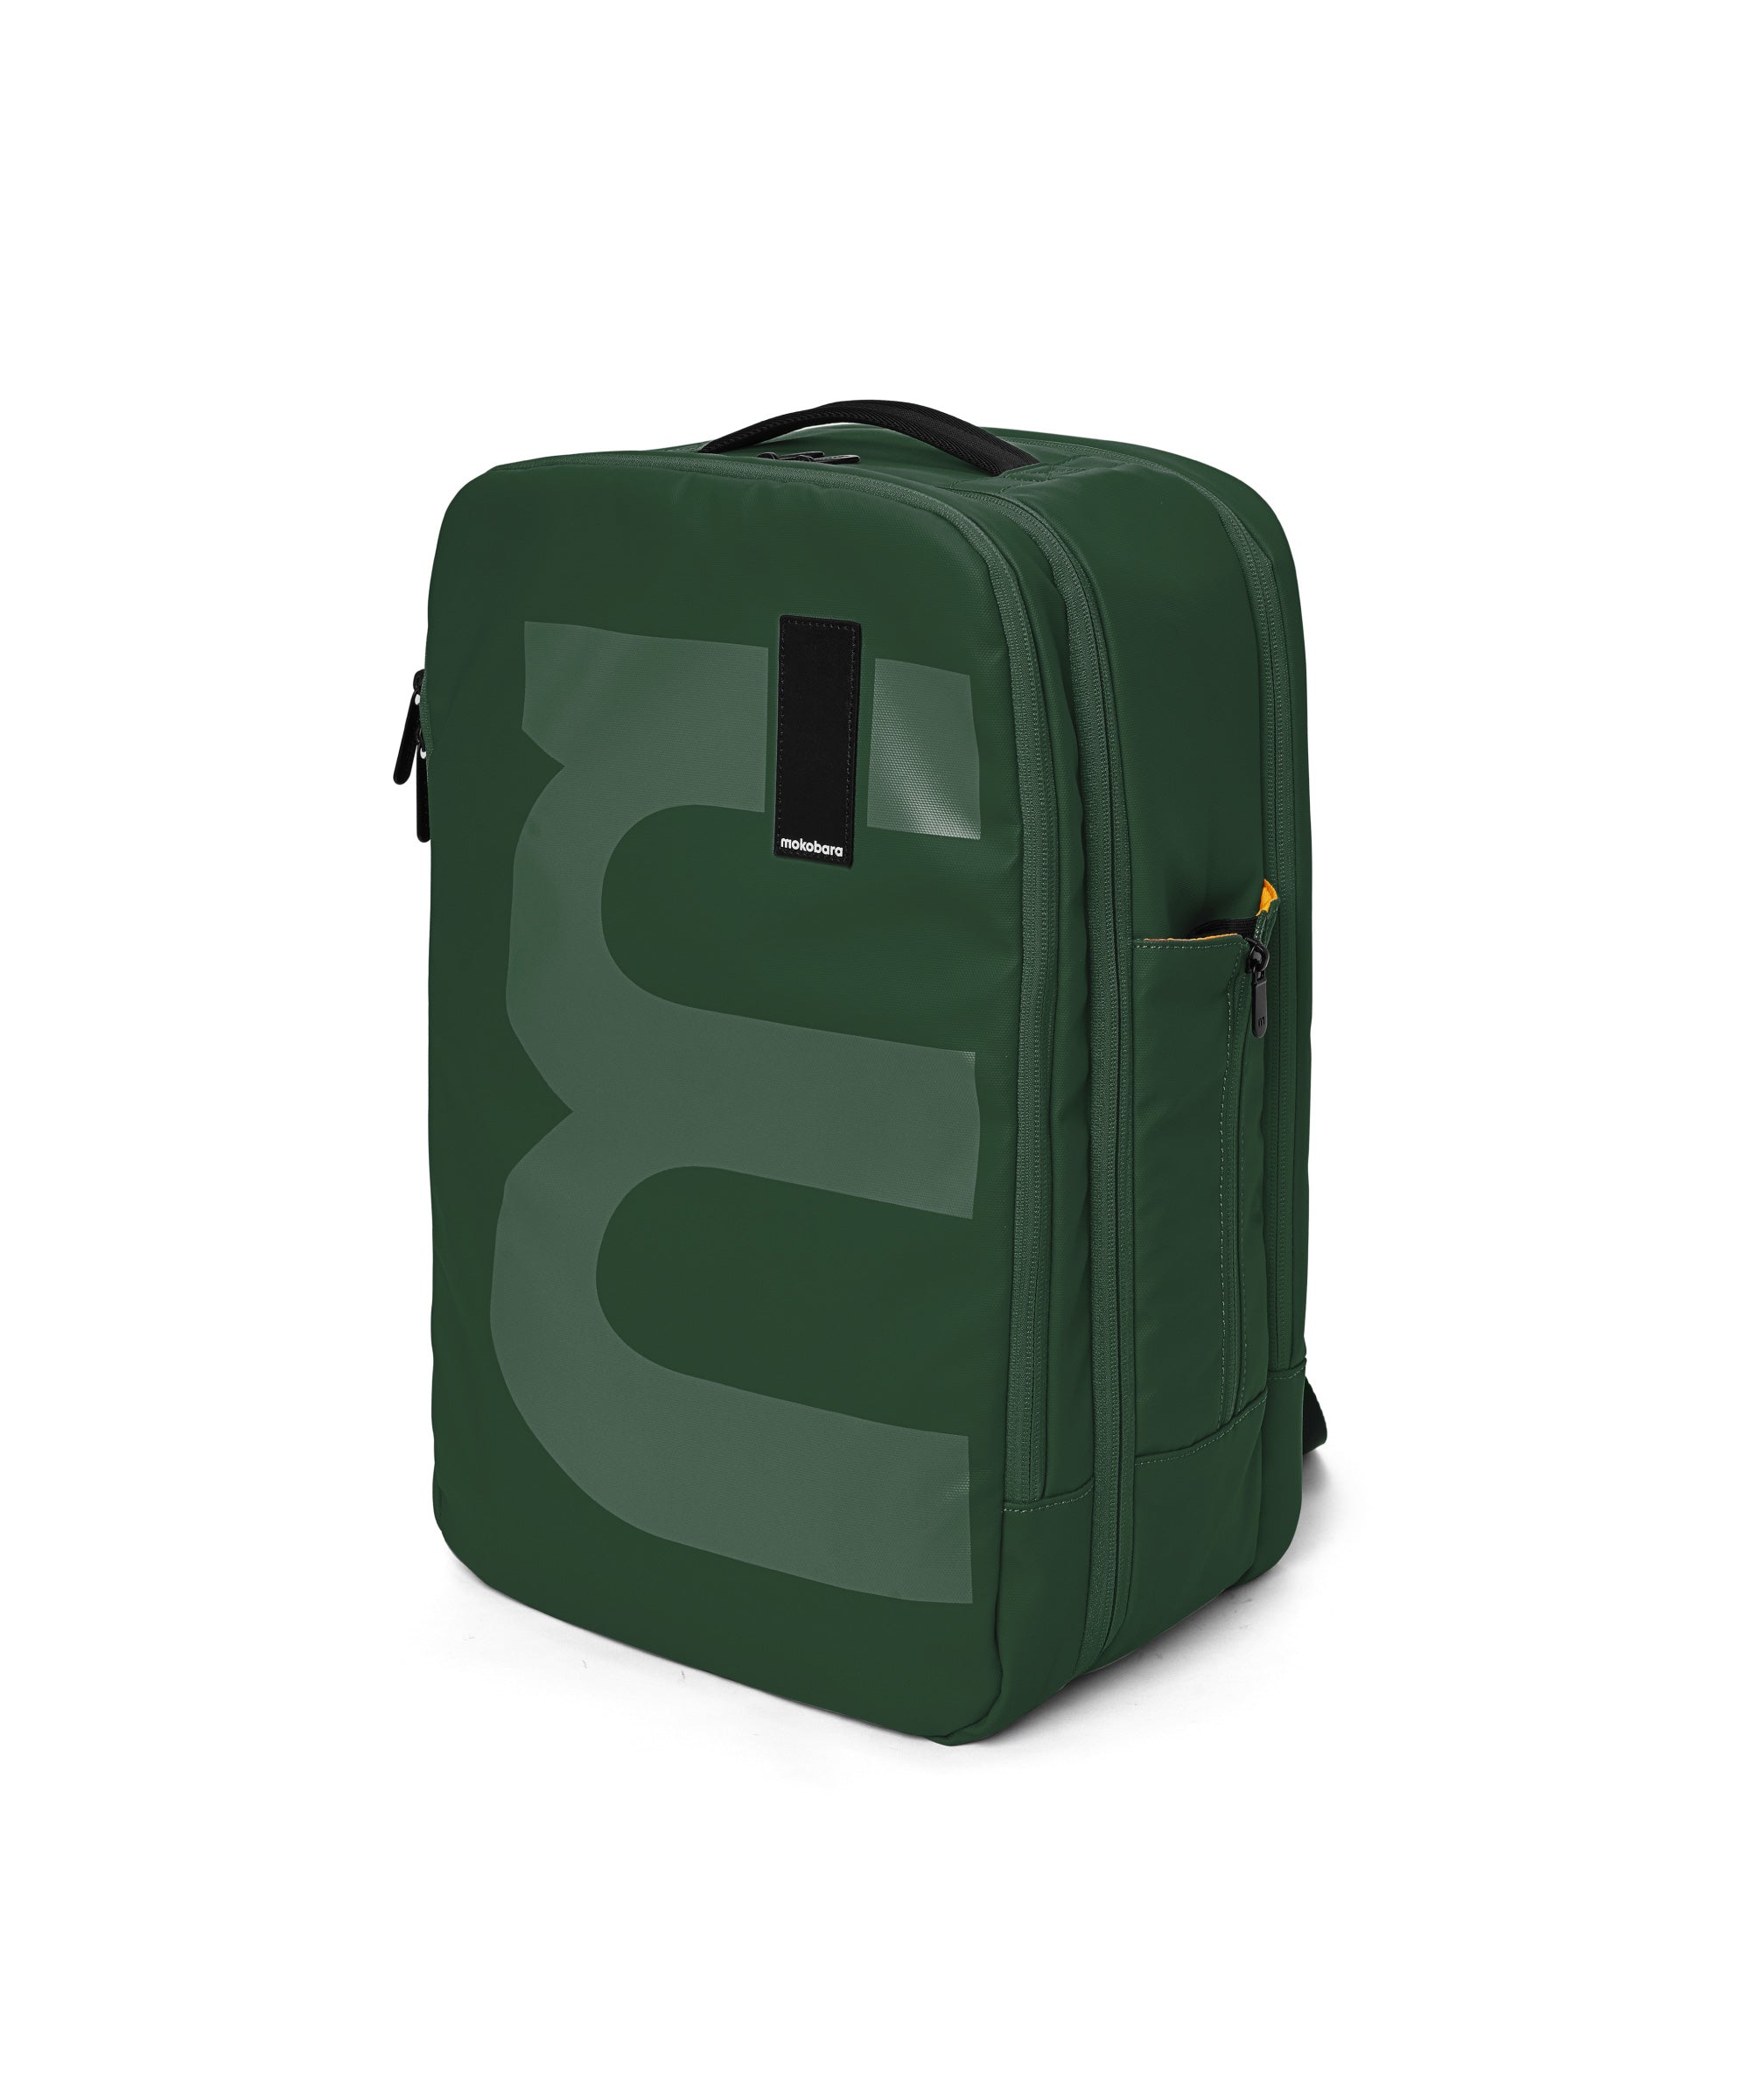 Color_ Green Energy | The Em Travel Backpack - 45L